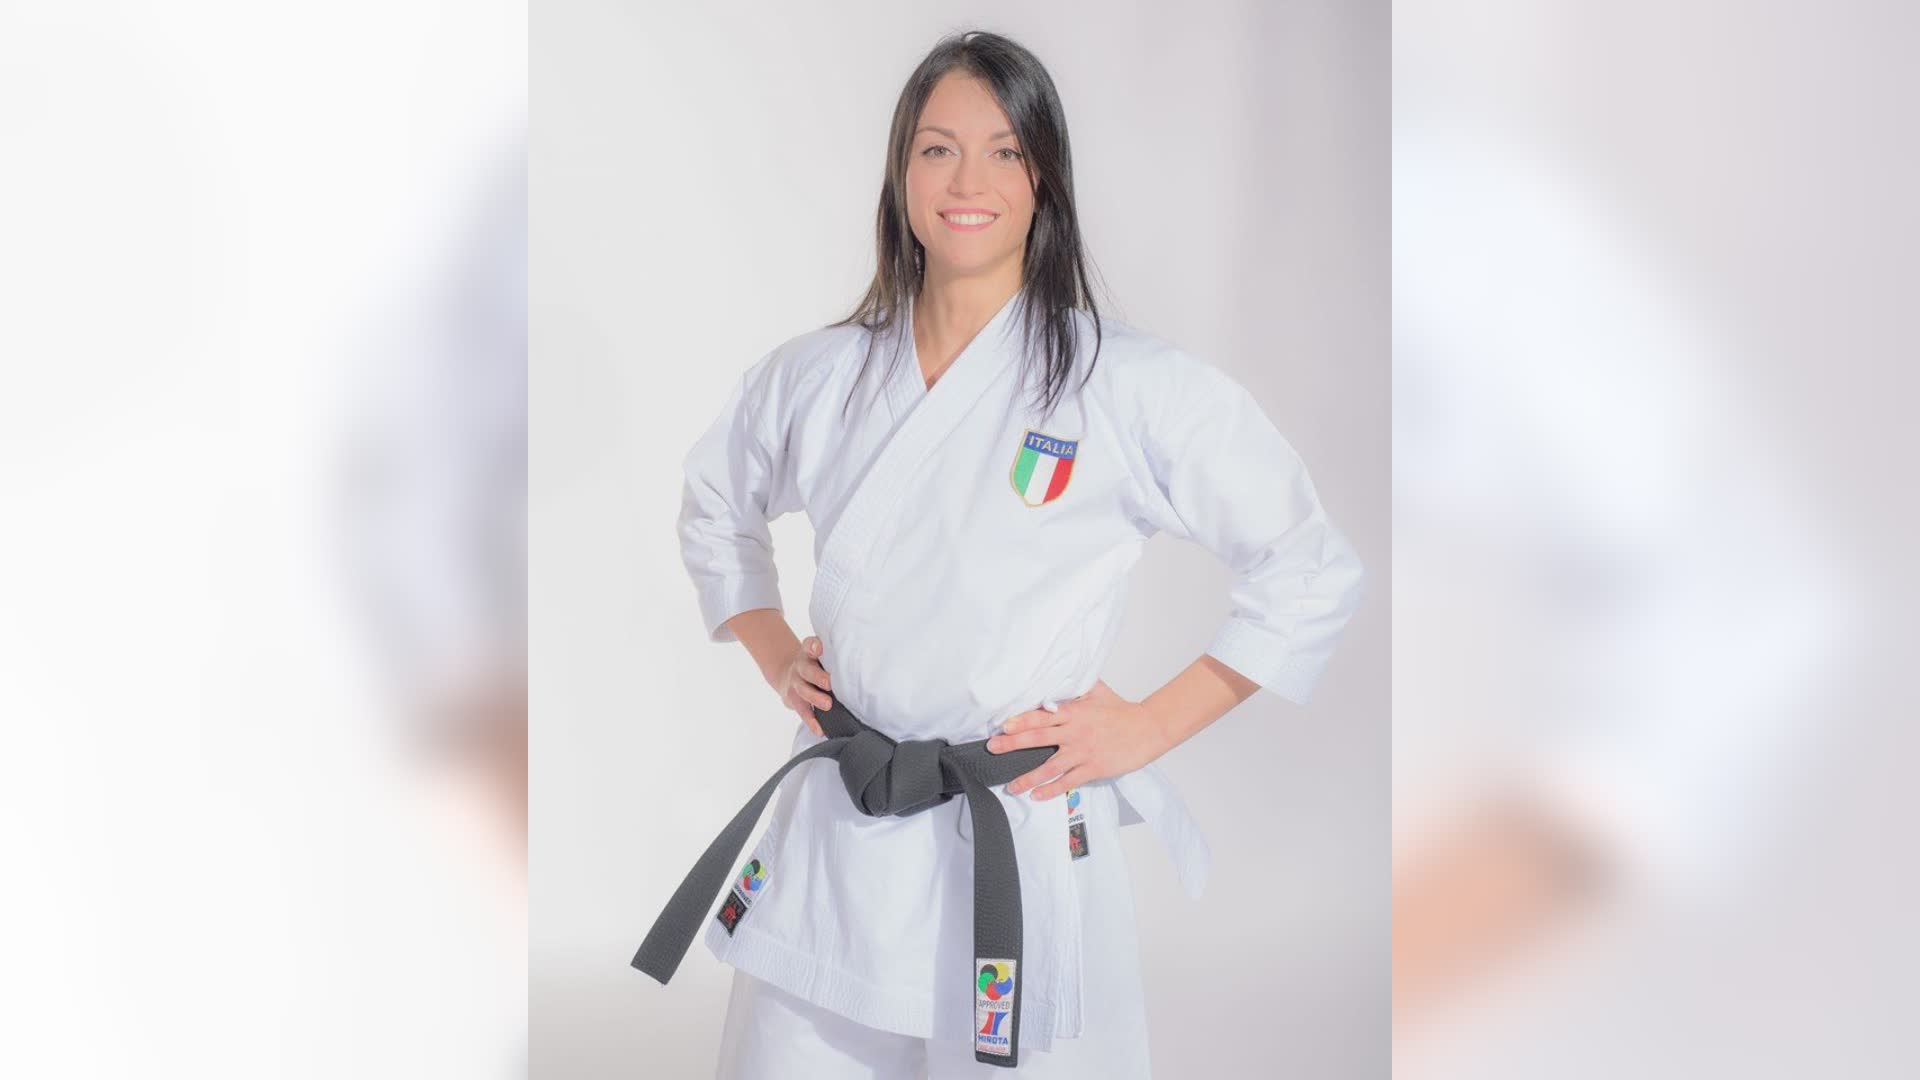 Mondiali a Dubai, bronzo nel kata a squadre per Michela Pezzetti